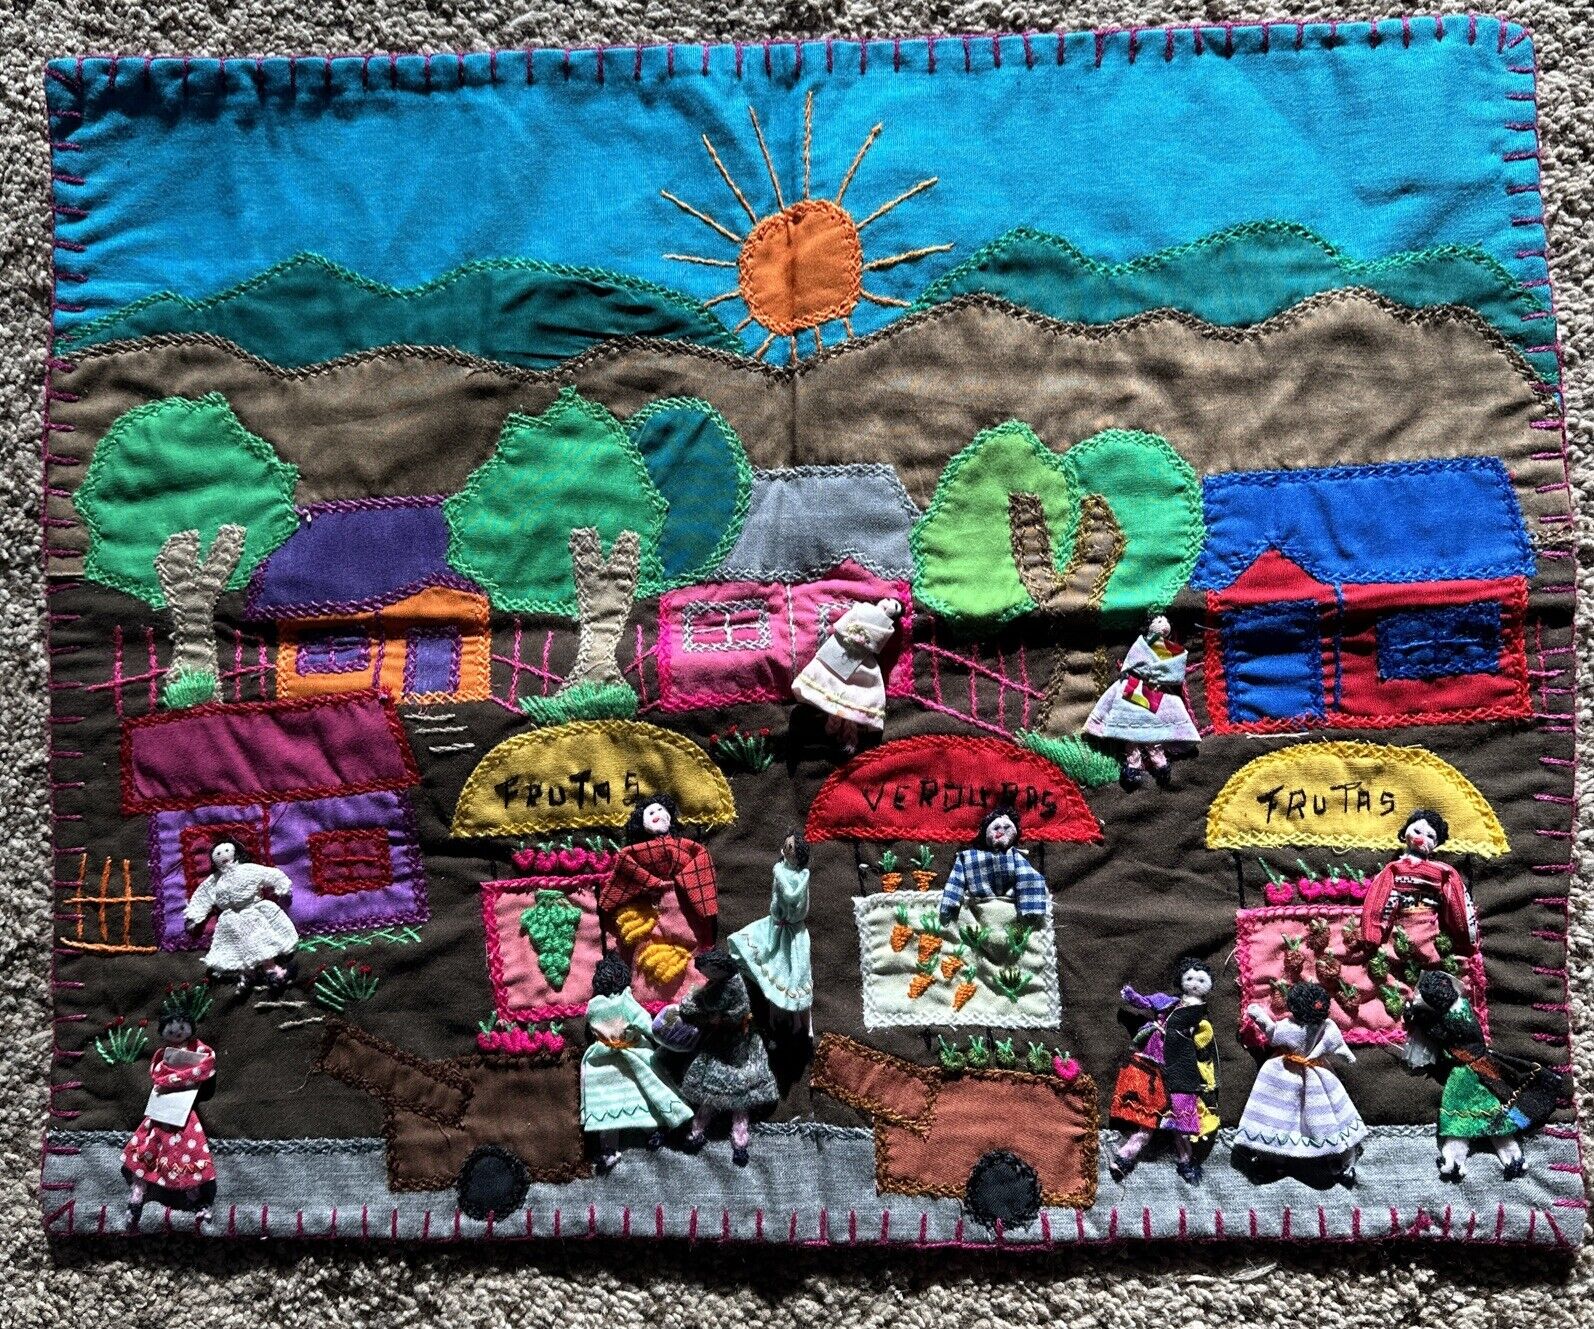 Peruvian Textile Folk Art Applique 3D Market Scene 19”x15”